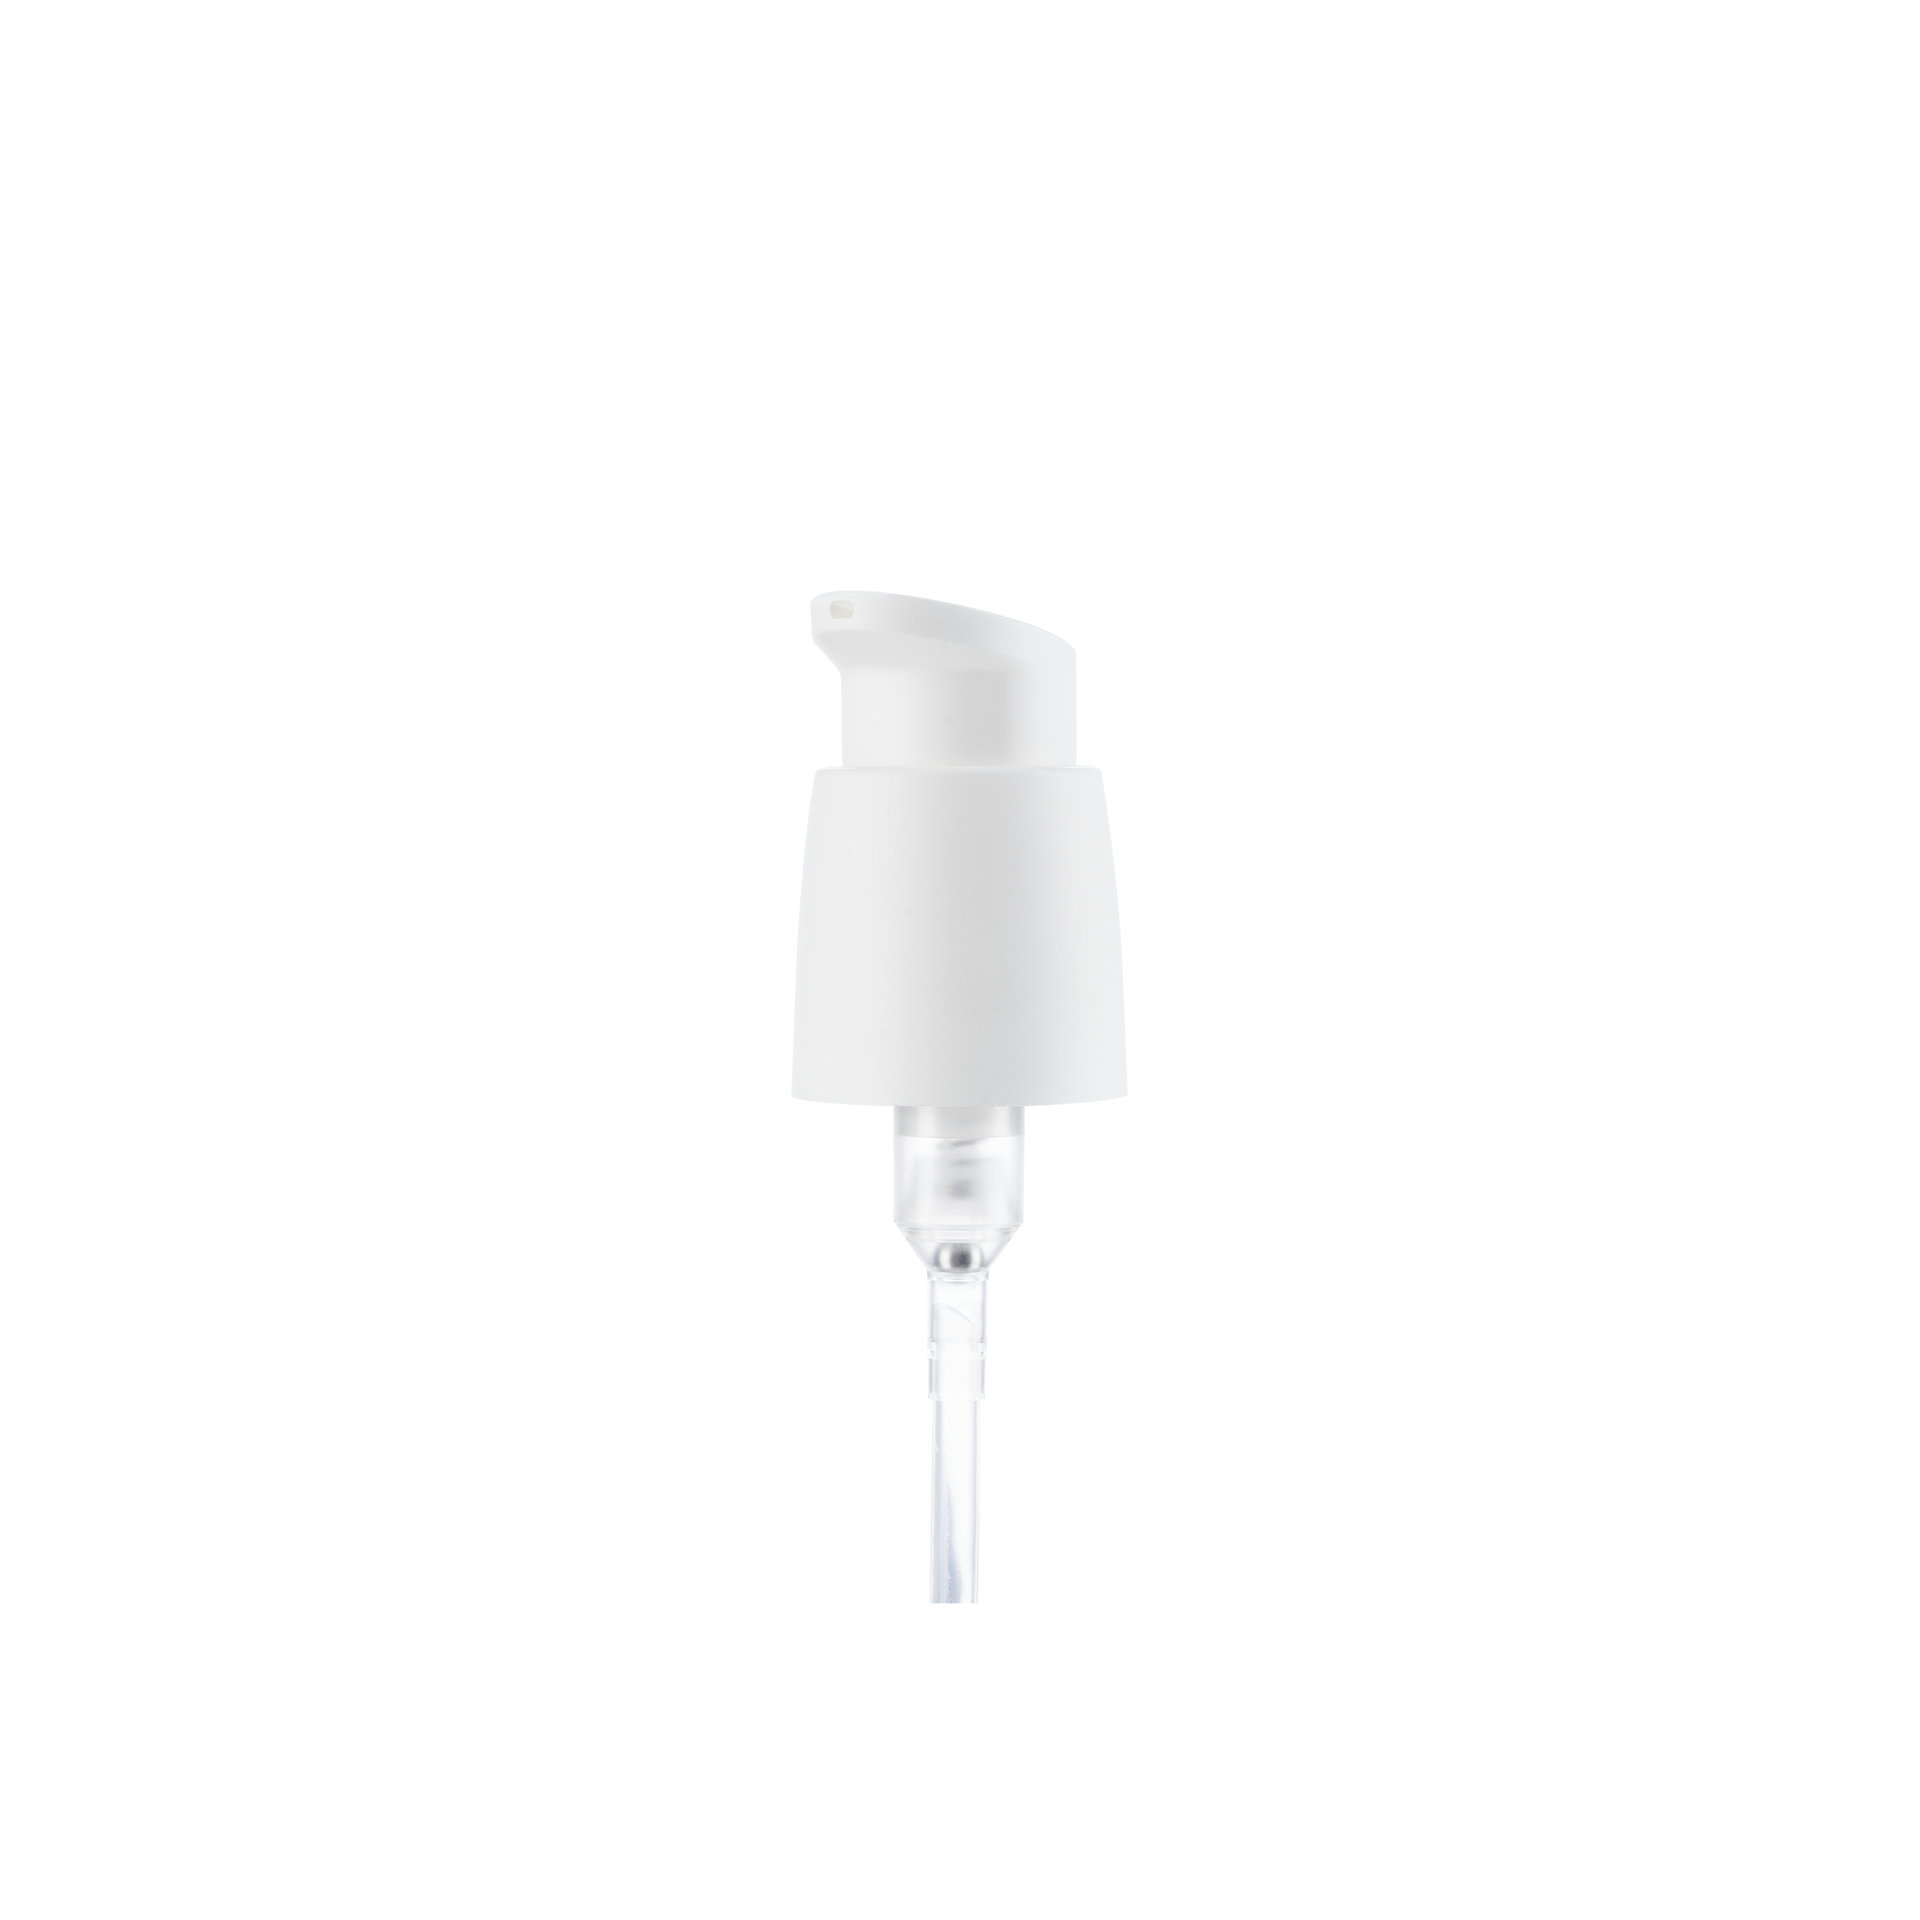 Lotion pump Cremosa 24/410, PP, white, matte finish, dose 0.28ml, twist-lock (Laurel 50)